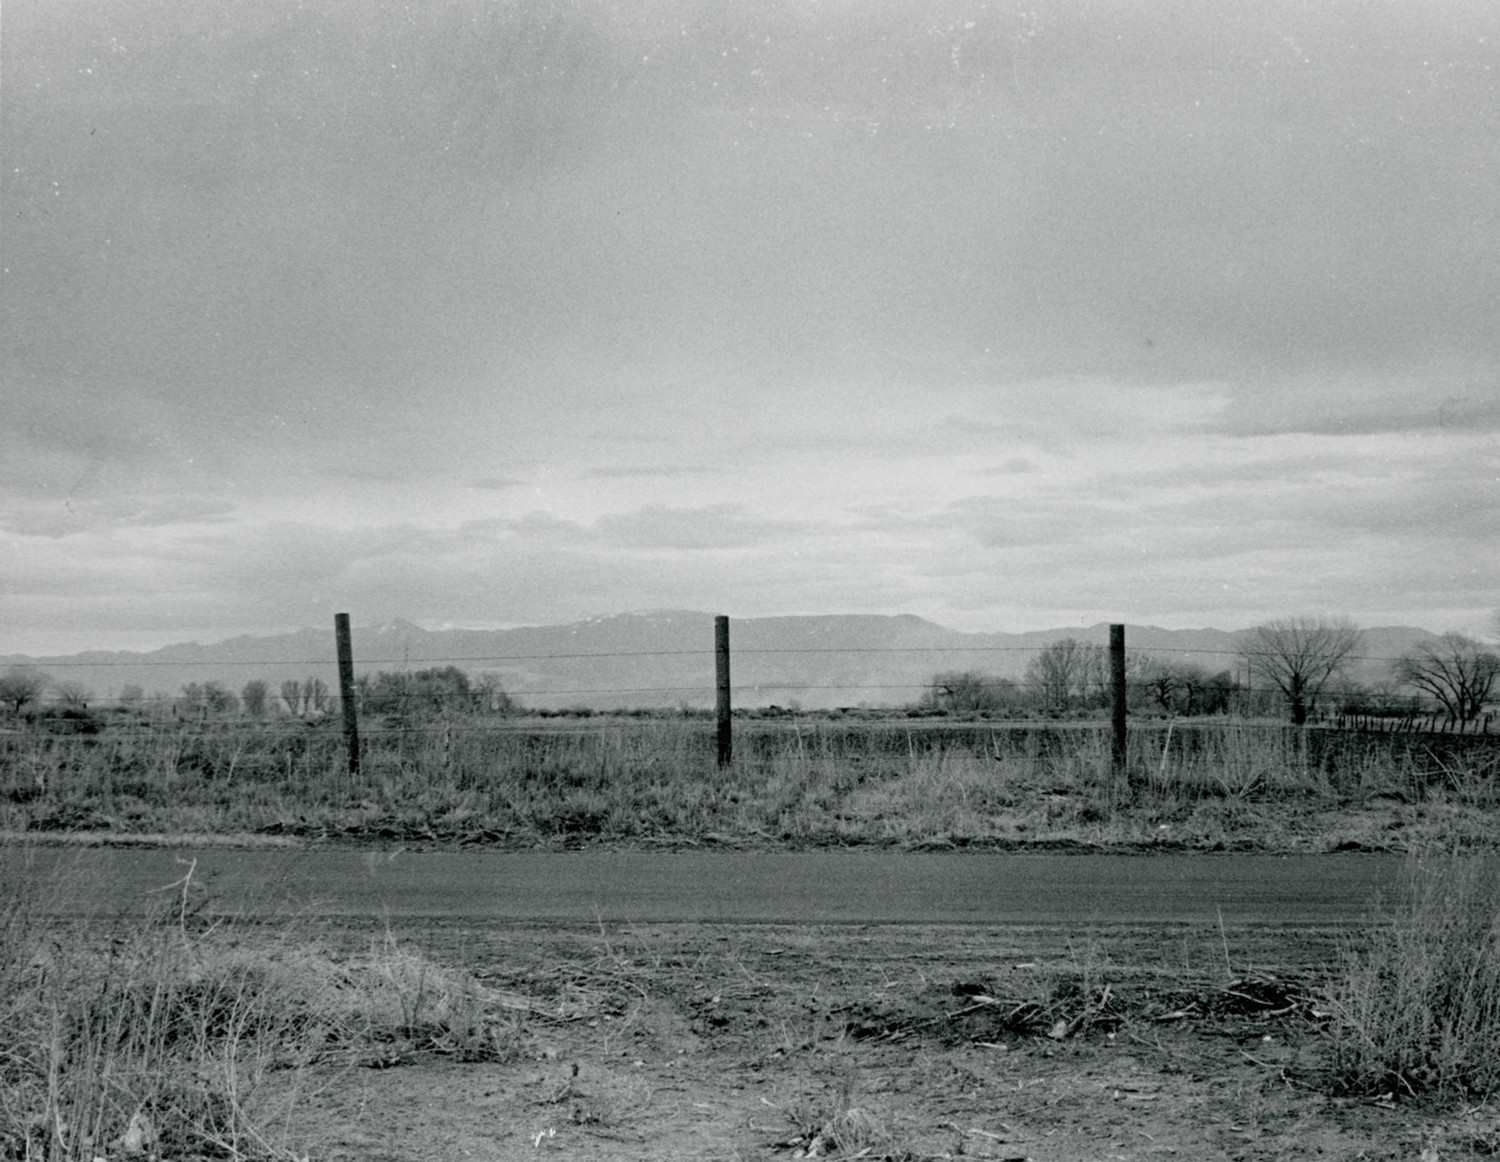 Harmon School, Fallon Nevada View looking south from main entrance (1989)